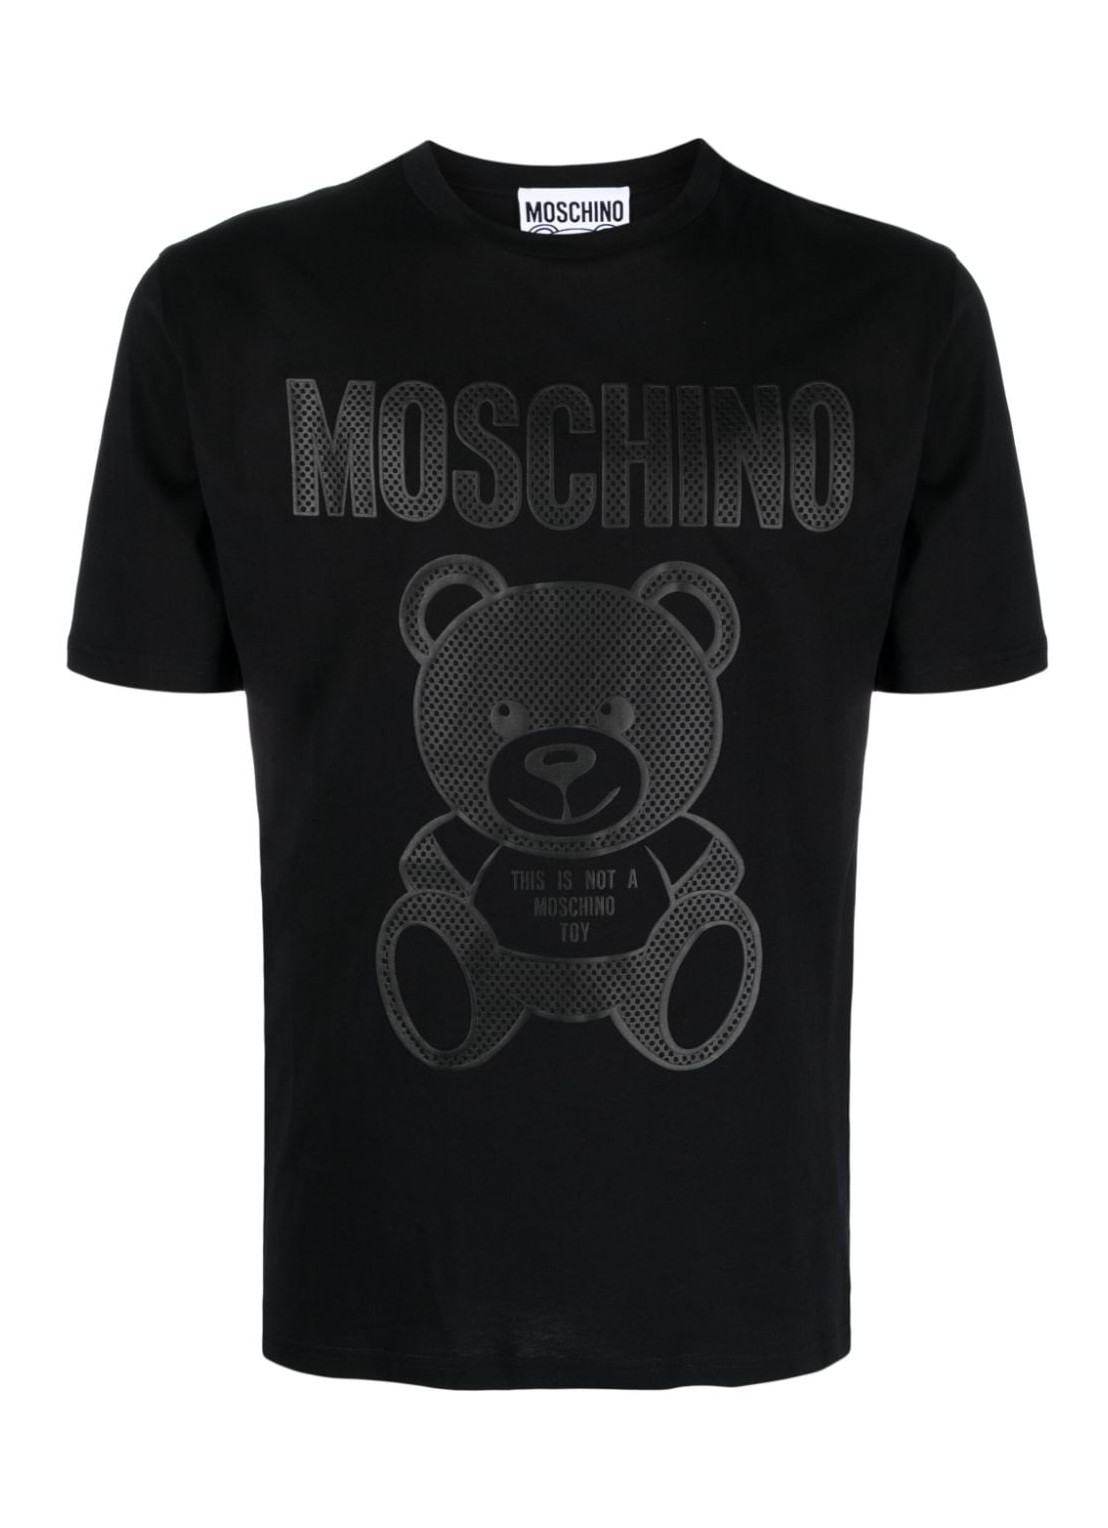 Camiseta moschino couture t-shirt man t-shirt 07272041 v1555 talla negro
 